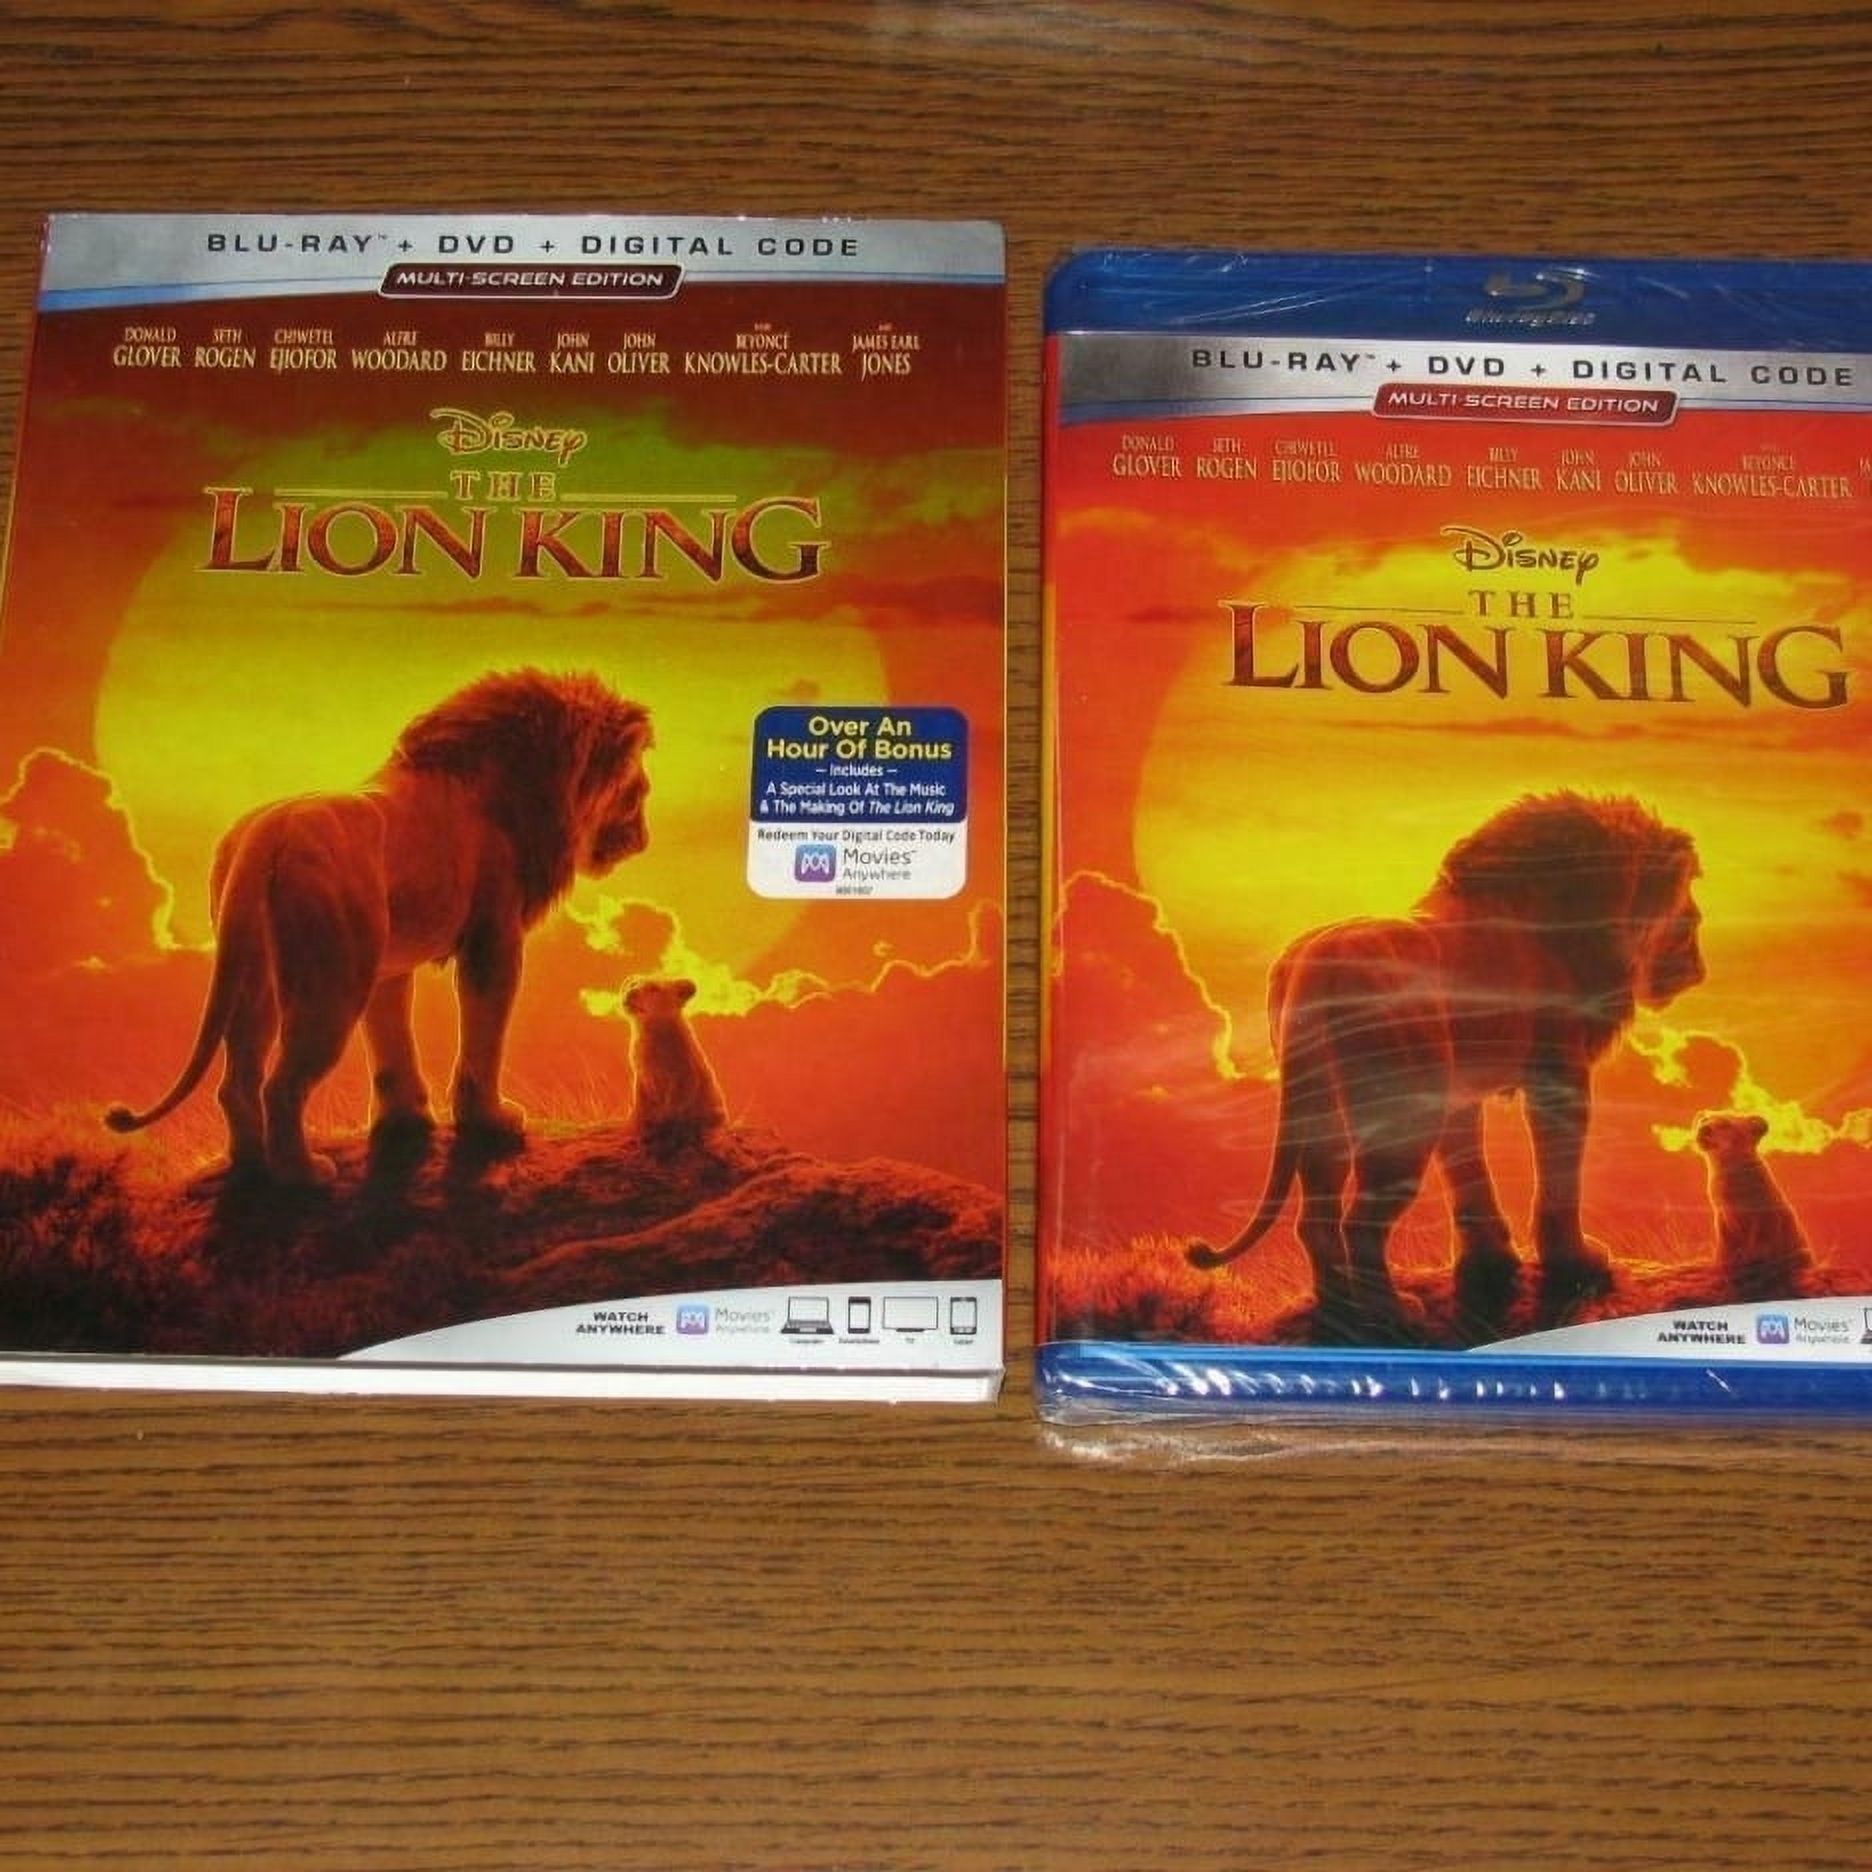 The Lion King 2019 (Blu-ray + DVD + Digital Copy) - image 2 of 6